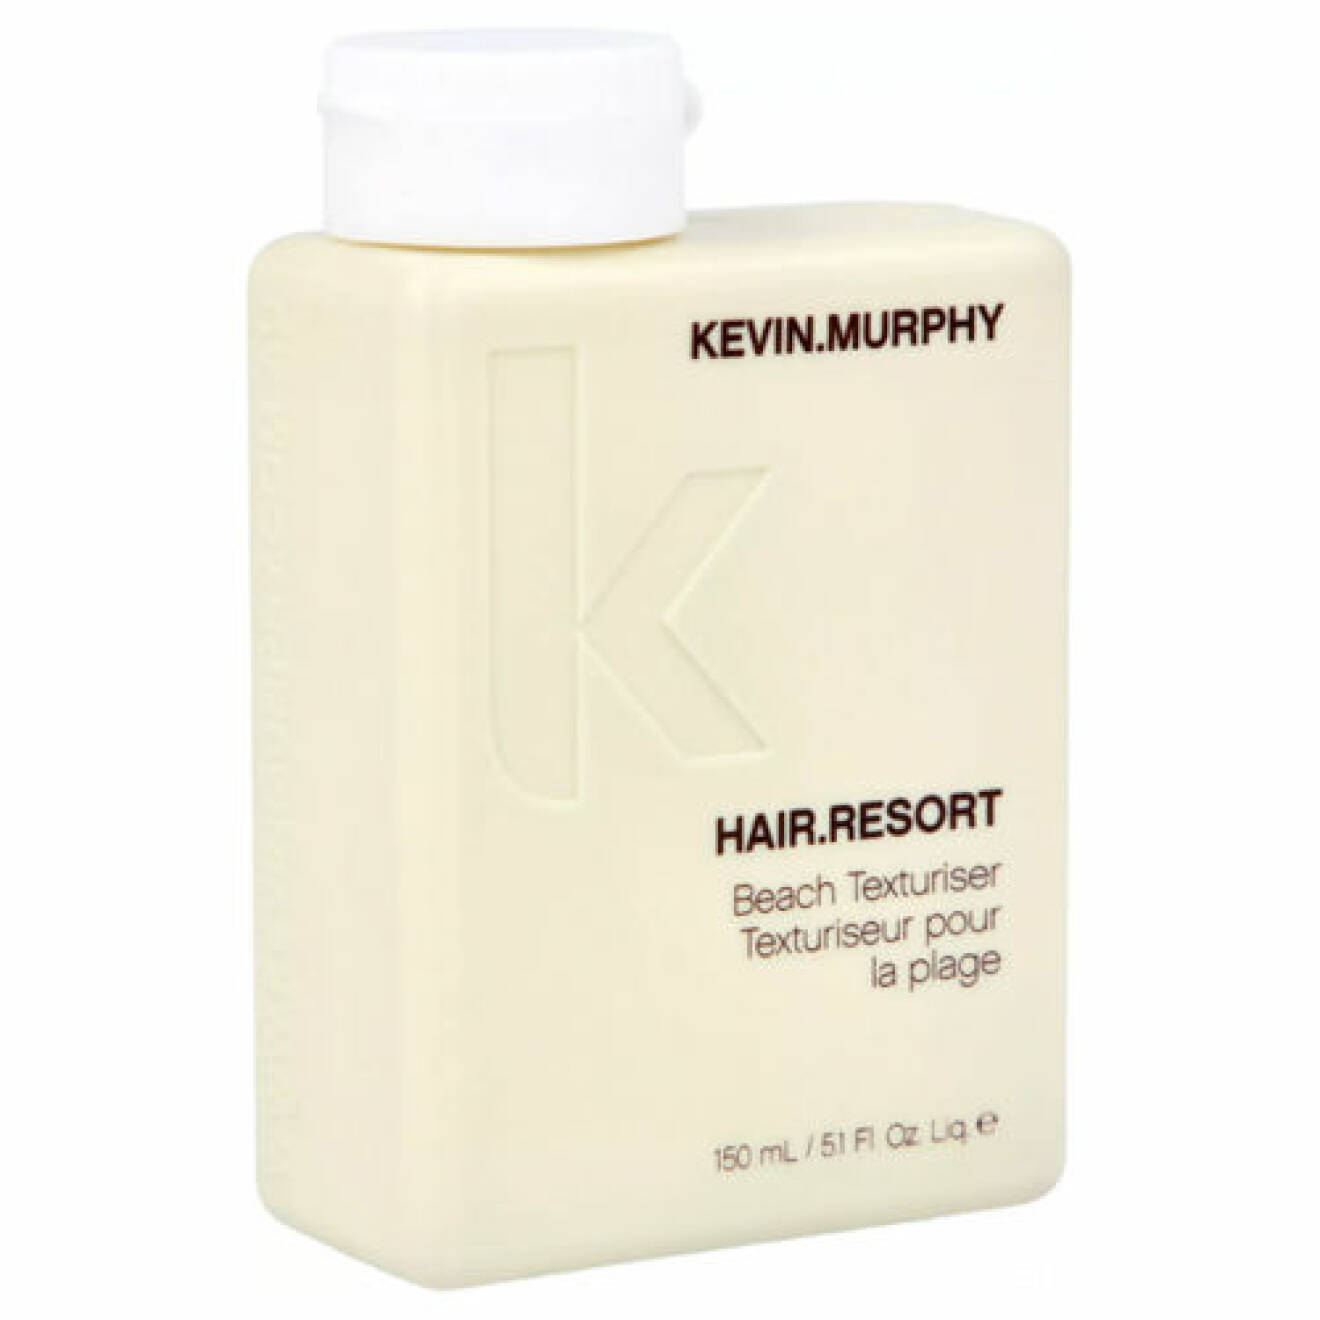 Hair resort Kevin Murphy